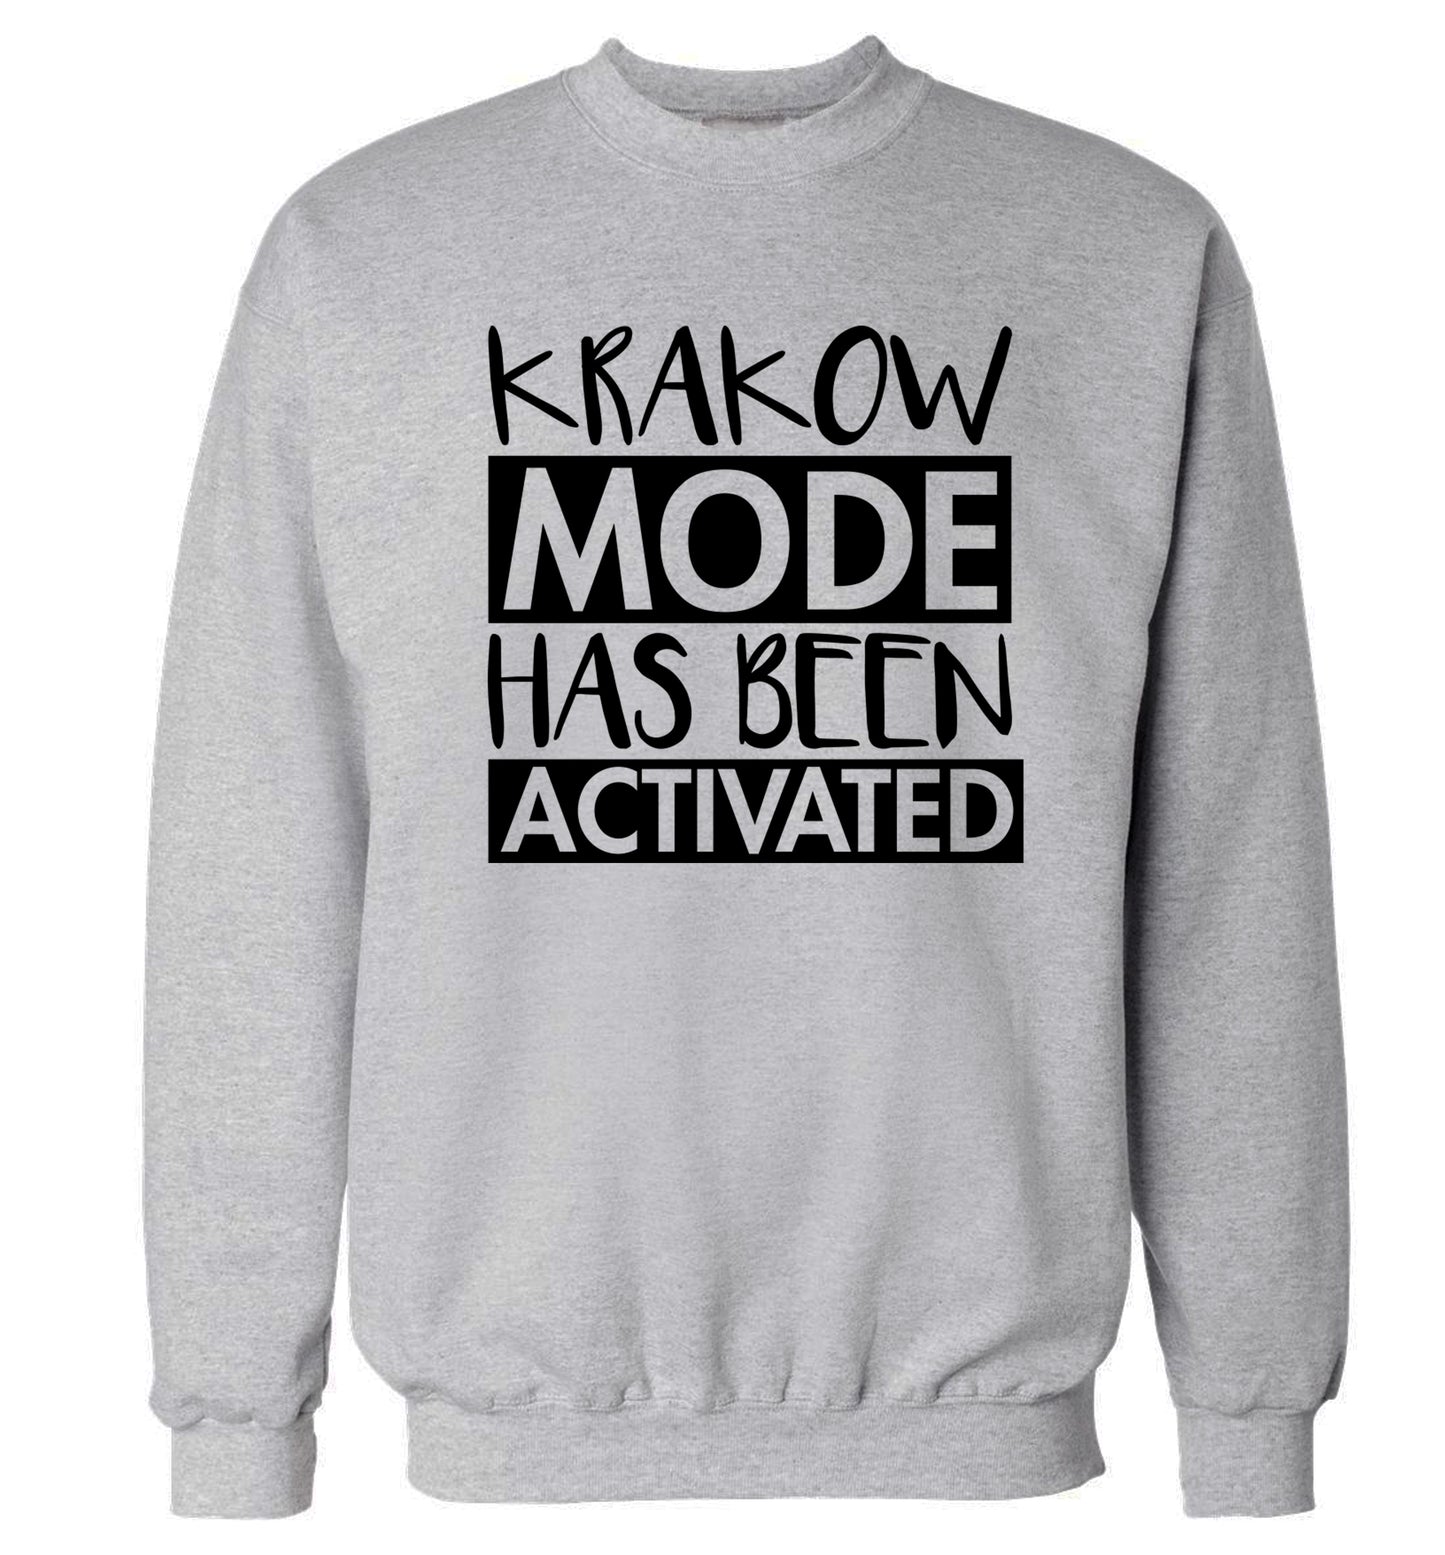 Krakow mode has been activated Adult's unisex grey Sweater 2XL